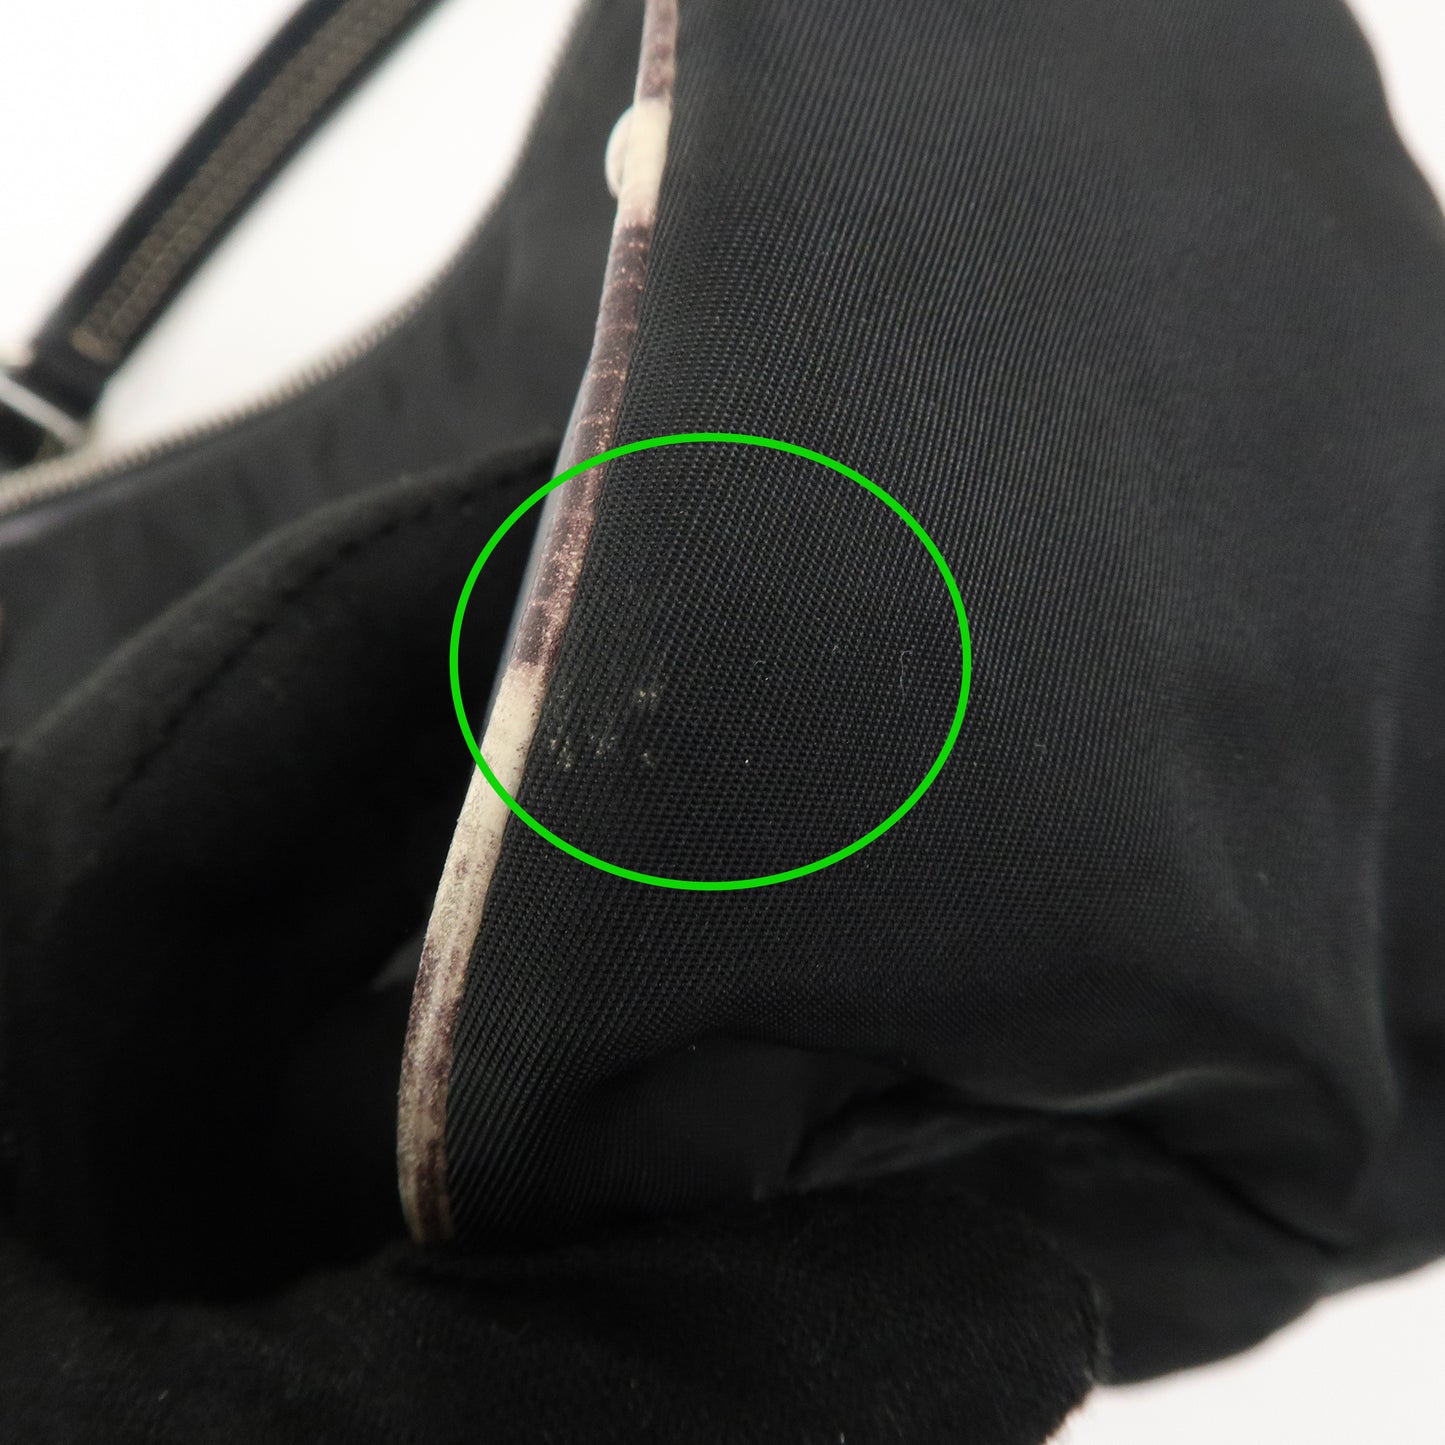 PRADA Nylon Leather One Shoulder Bag NERO Black